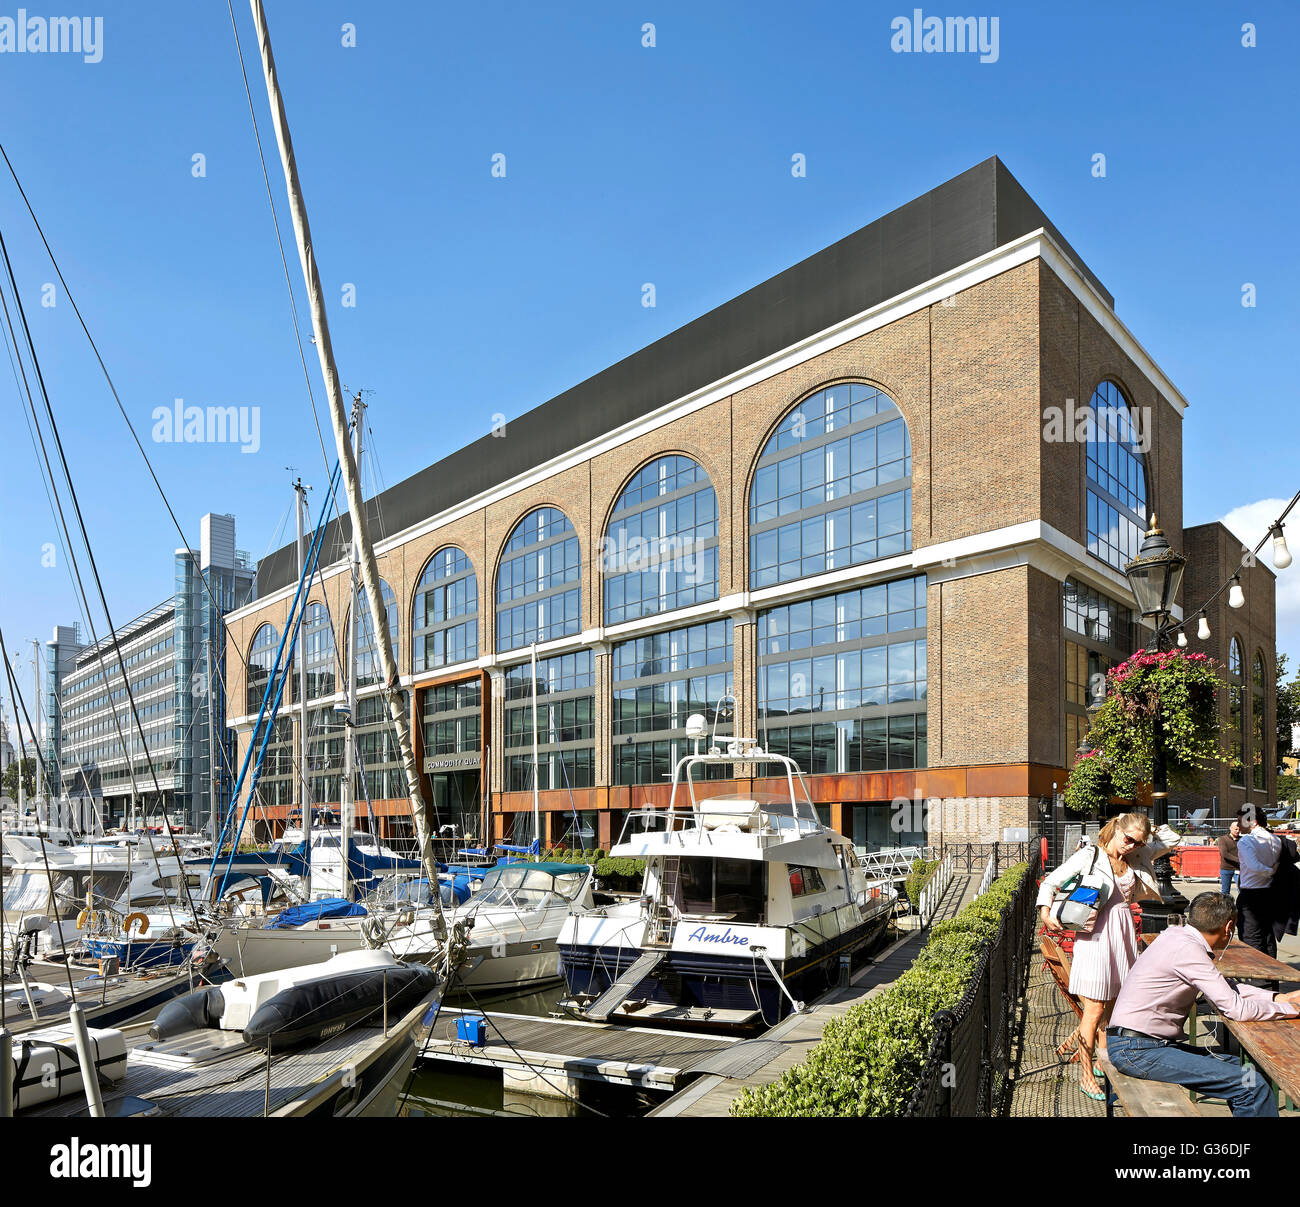 Context view of marina with yachts. Commodity Quay, London, United Kingdom. Architect: BuckleyGrayYeoman, 2014. Stock Photo